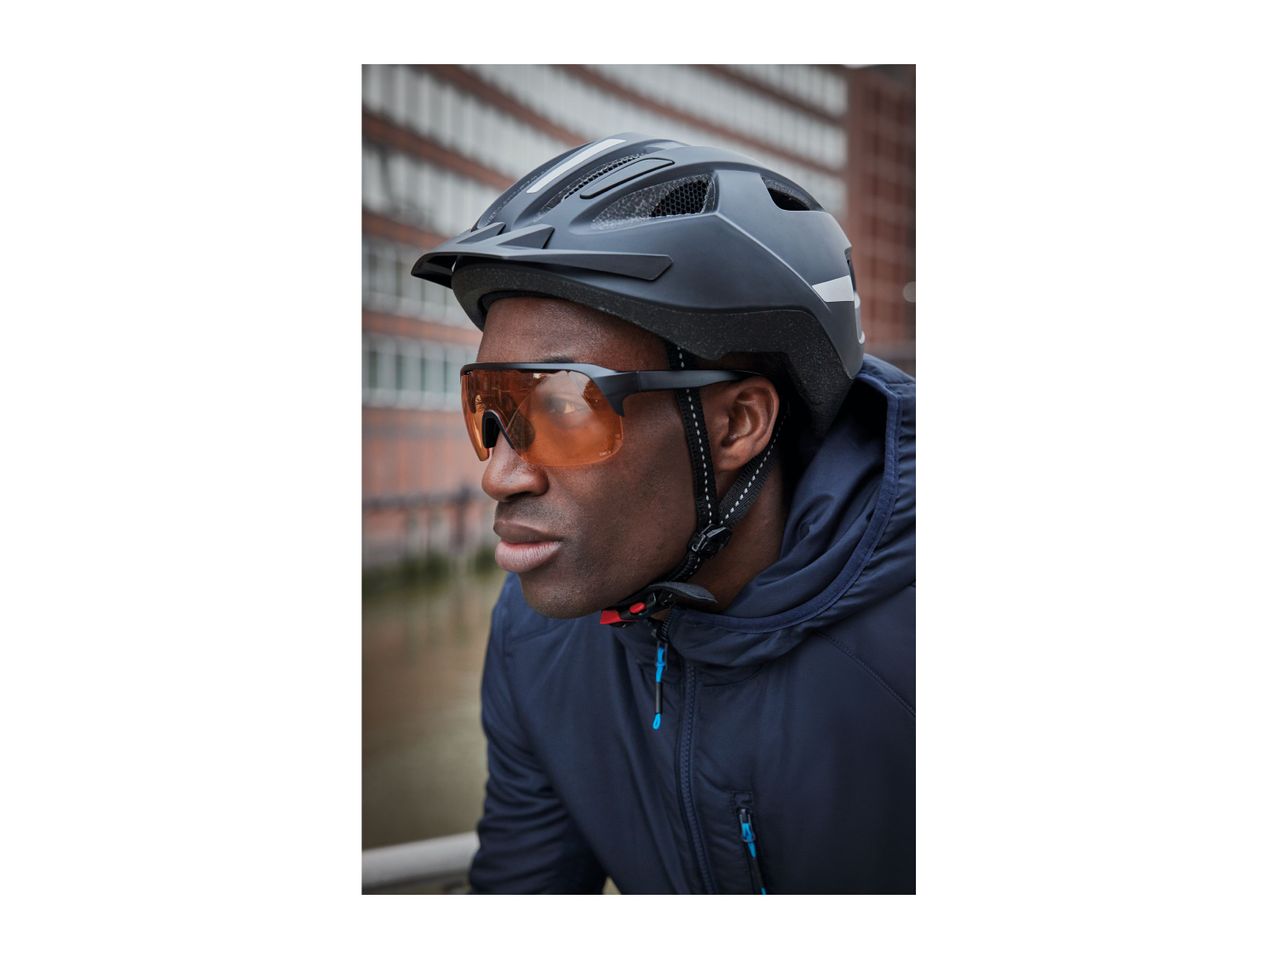 Go to full screen view: Crivit Bike Helmet with Rear Light - Image 7